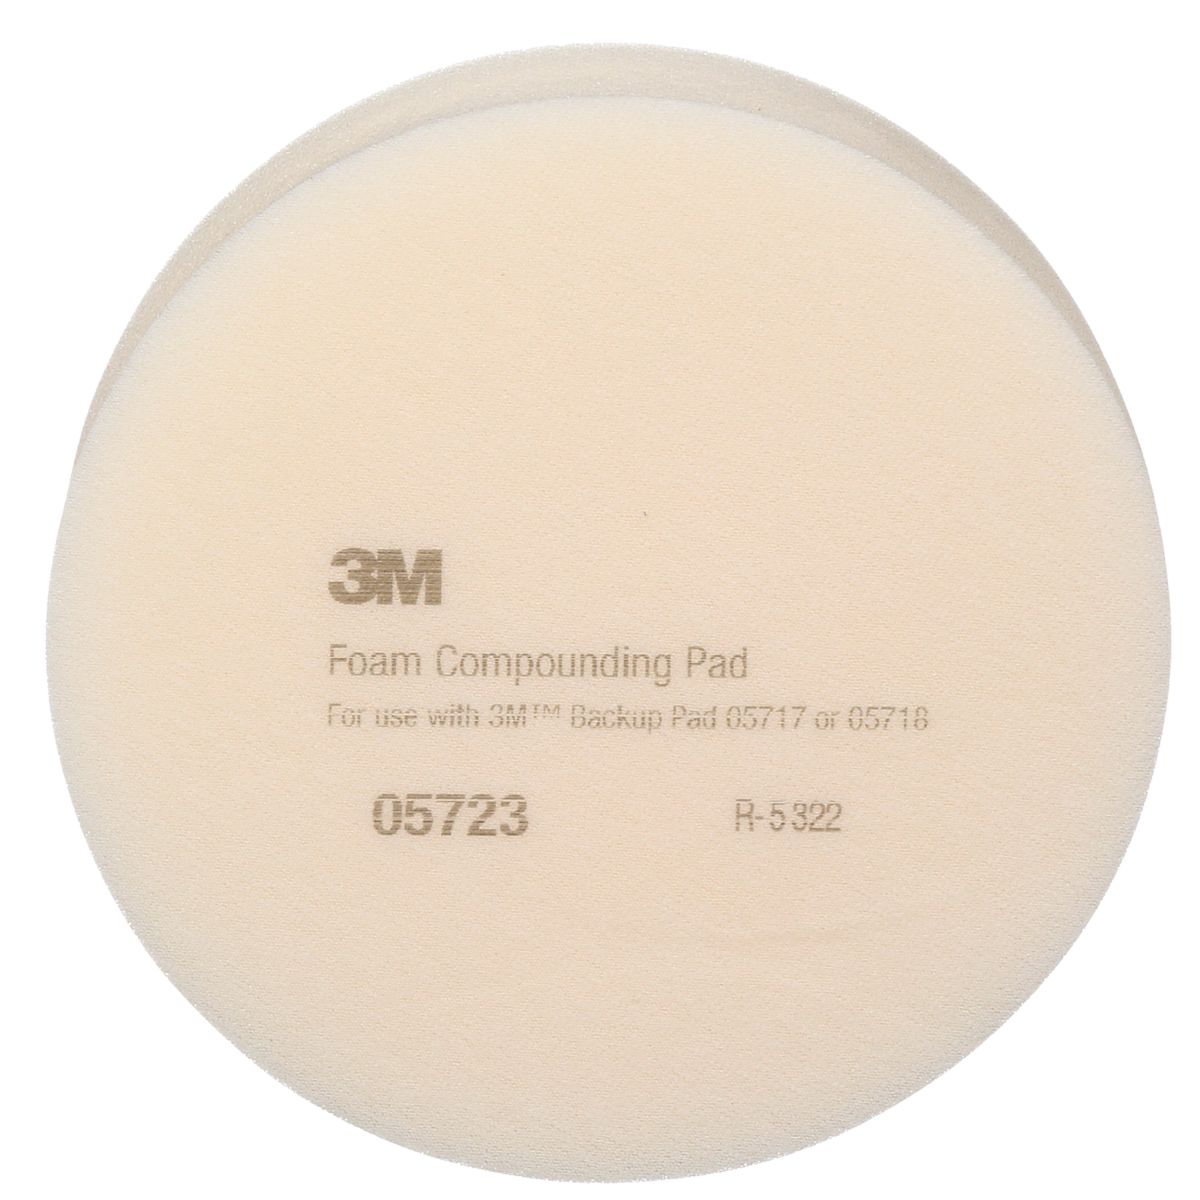 3M™ 05723 8" Foam Compounding Pad